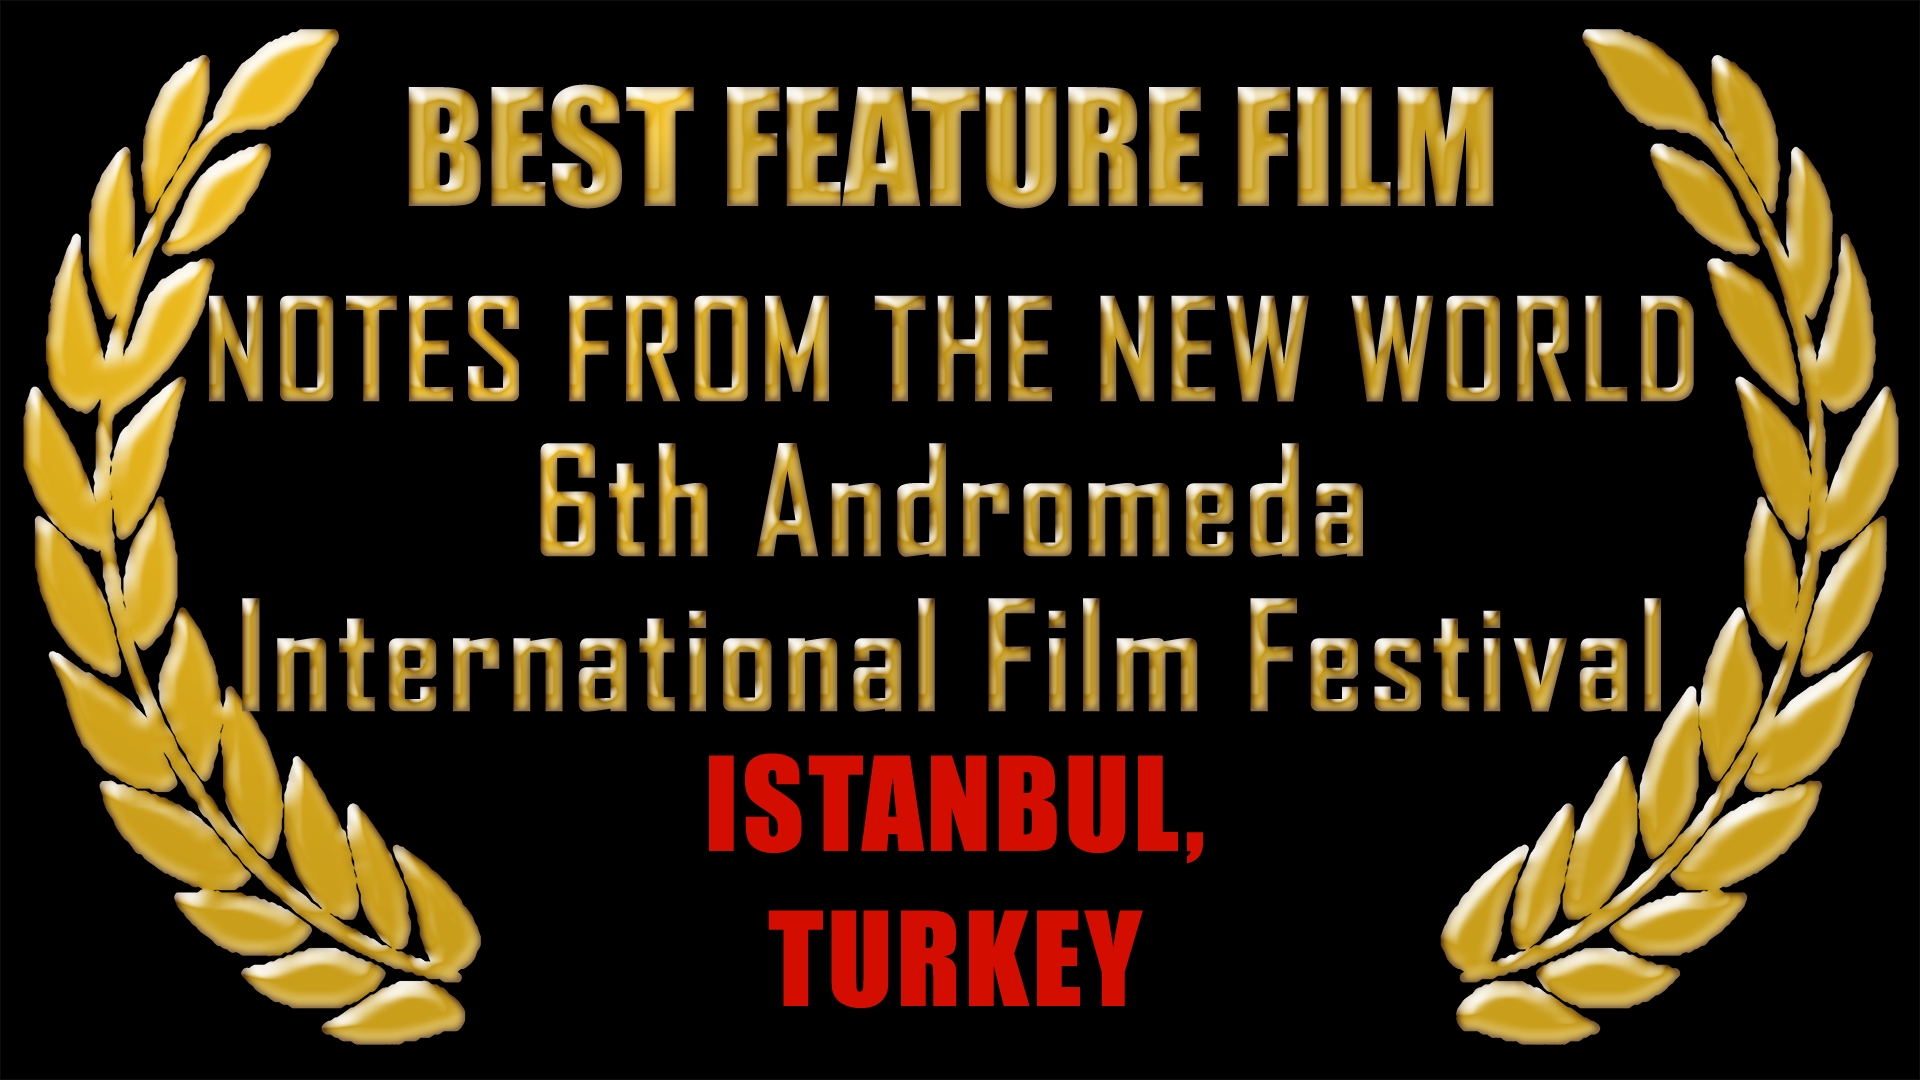 Best Feature Film, Instanbul - Turkey